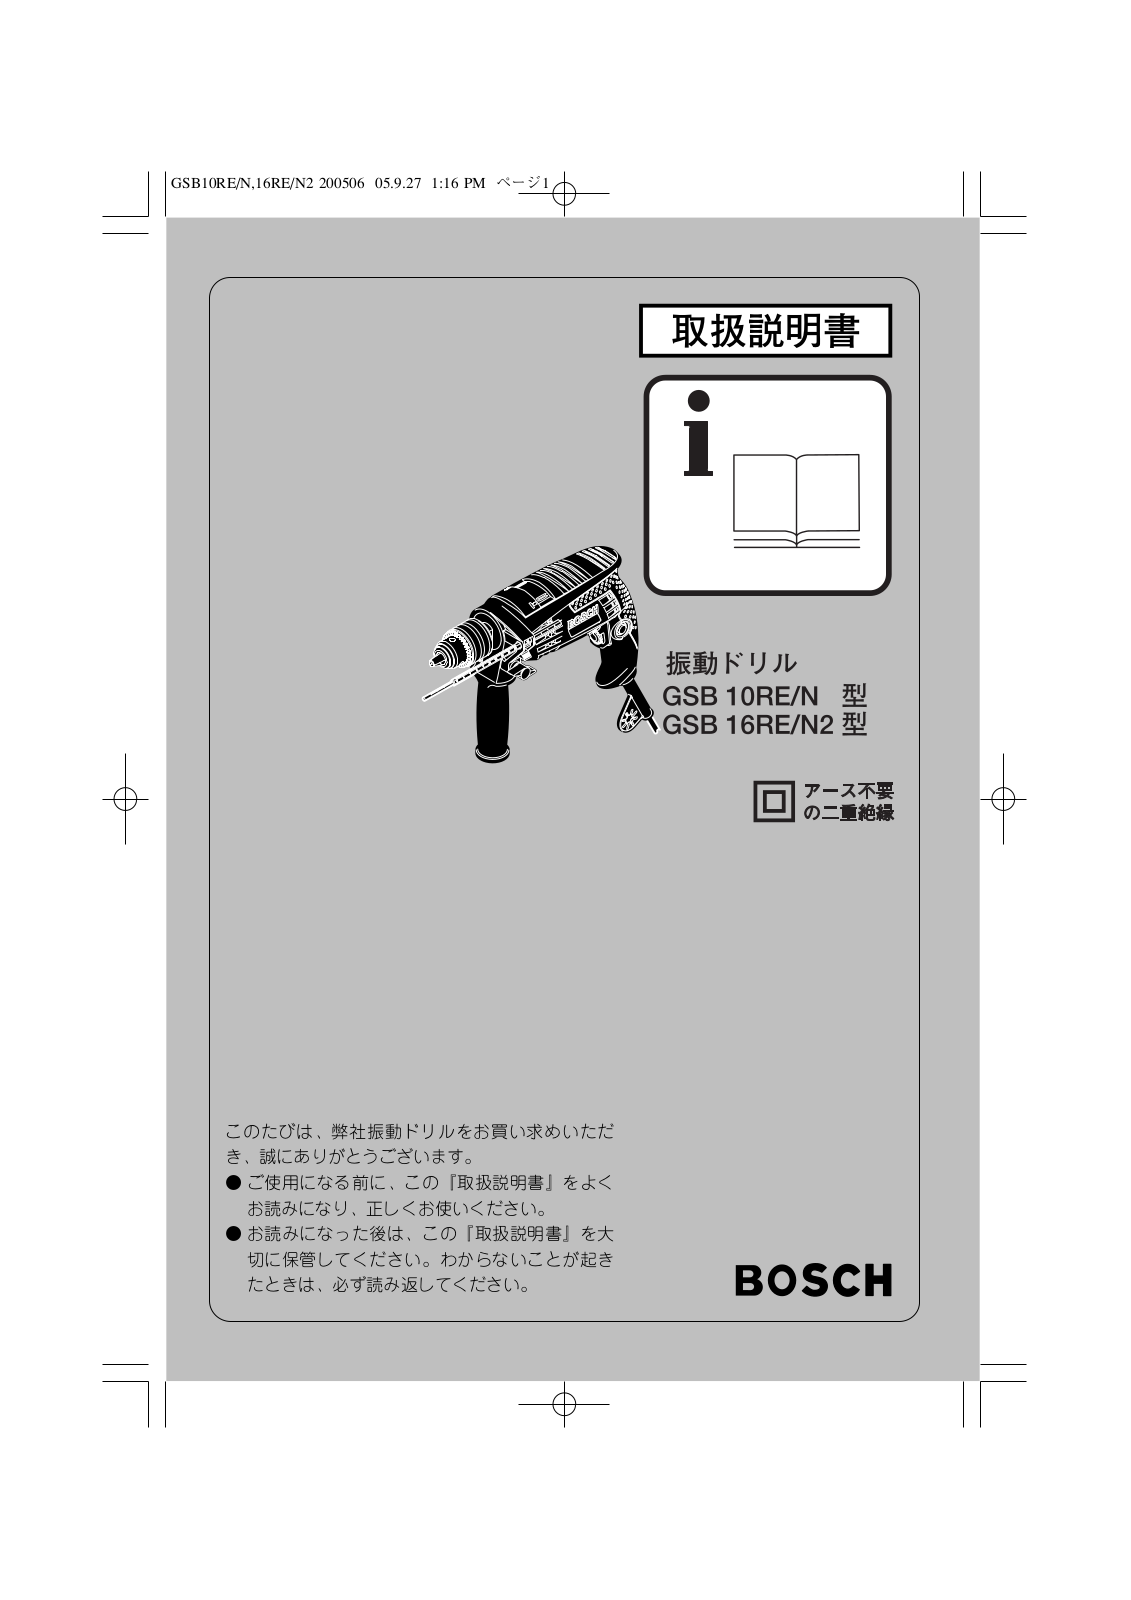 Bosch GSB 10 RE/N User Manual